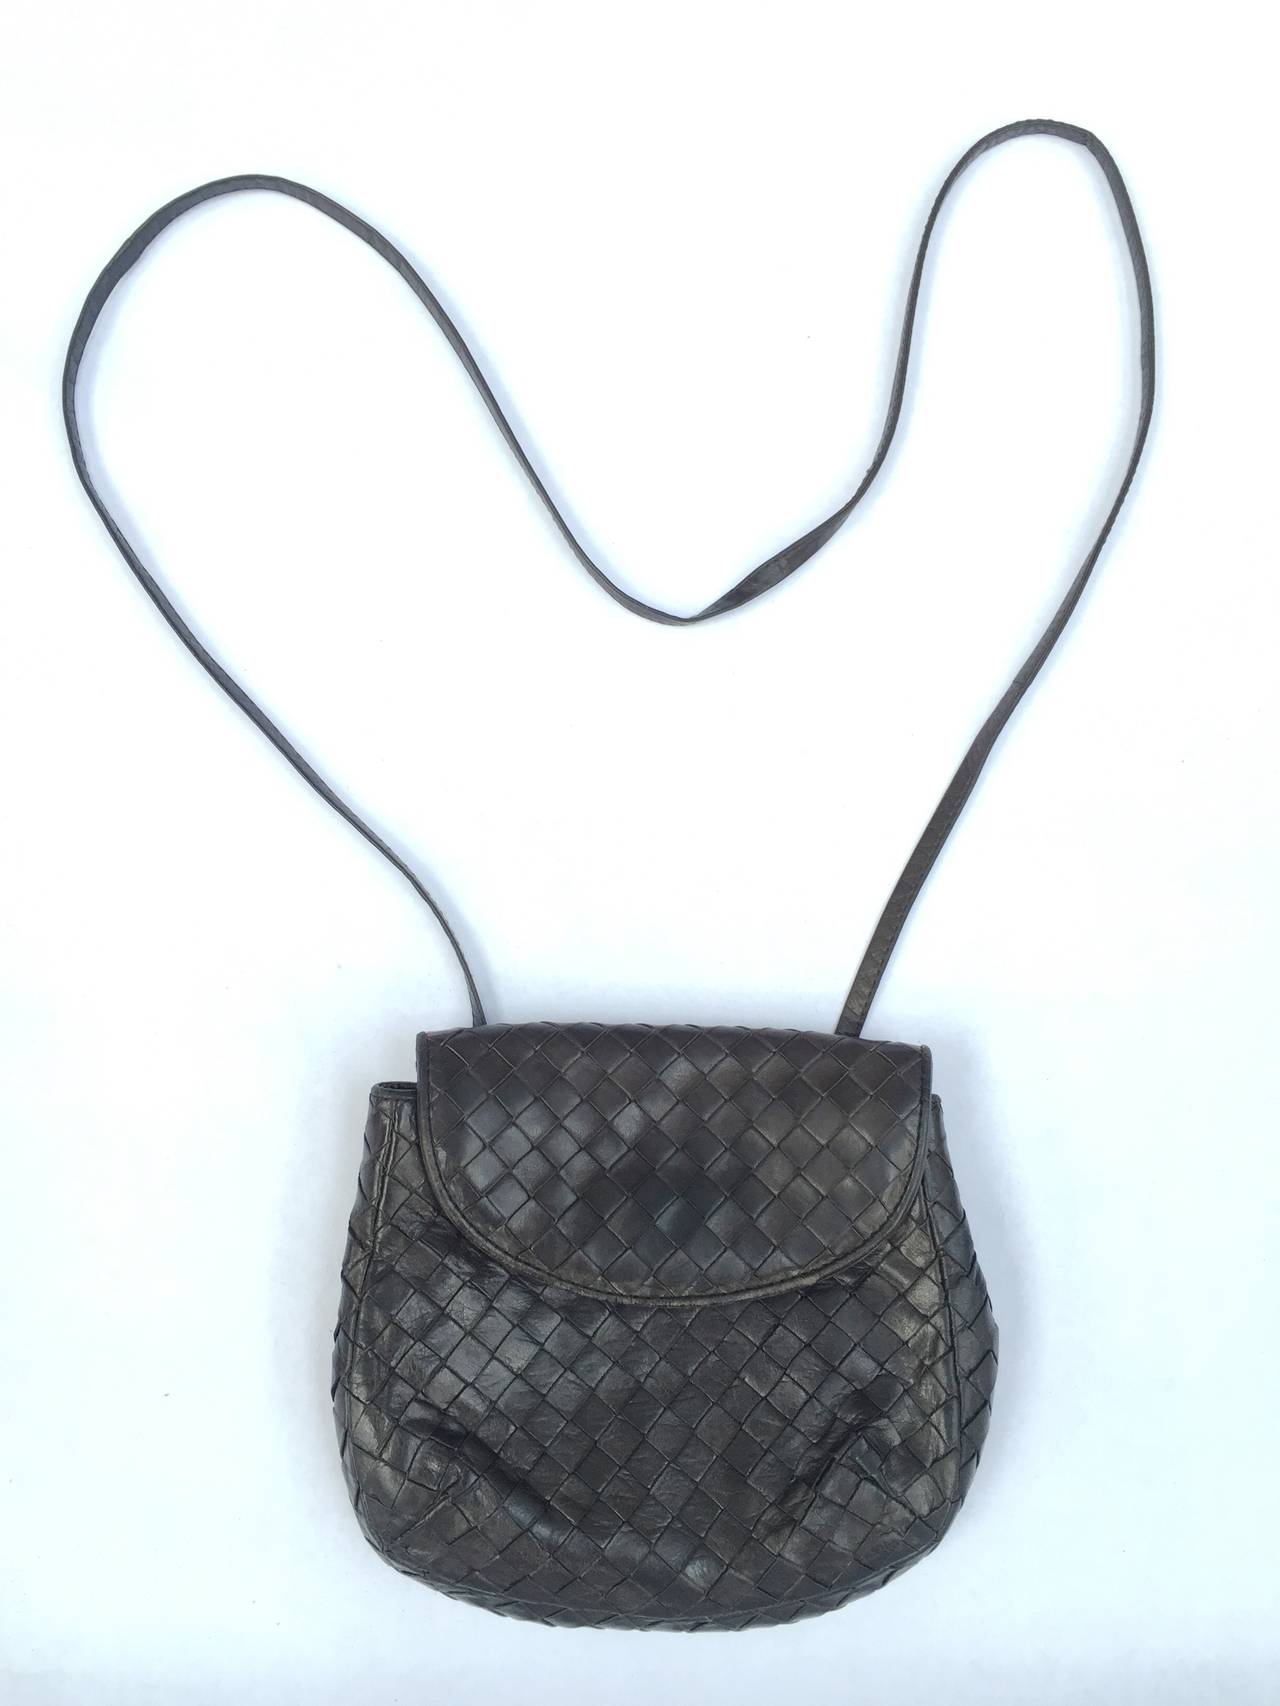 Bottega Veneta 1980s brown woven leather shoulder handbag / body cross bag.
Measurements are:
7